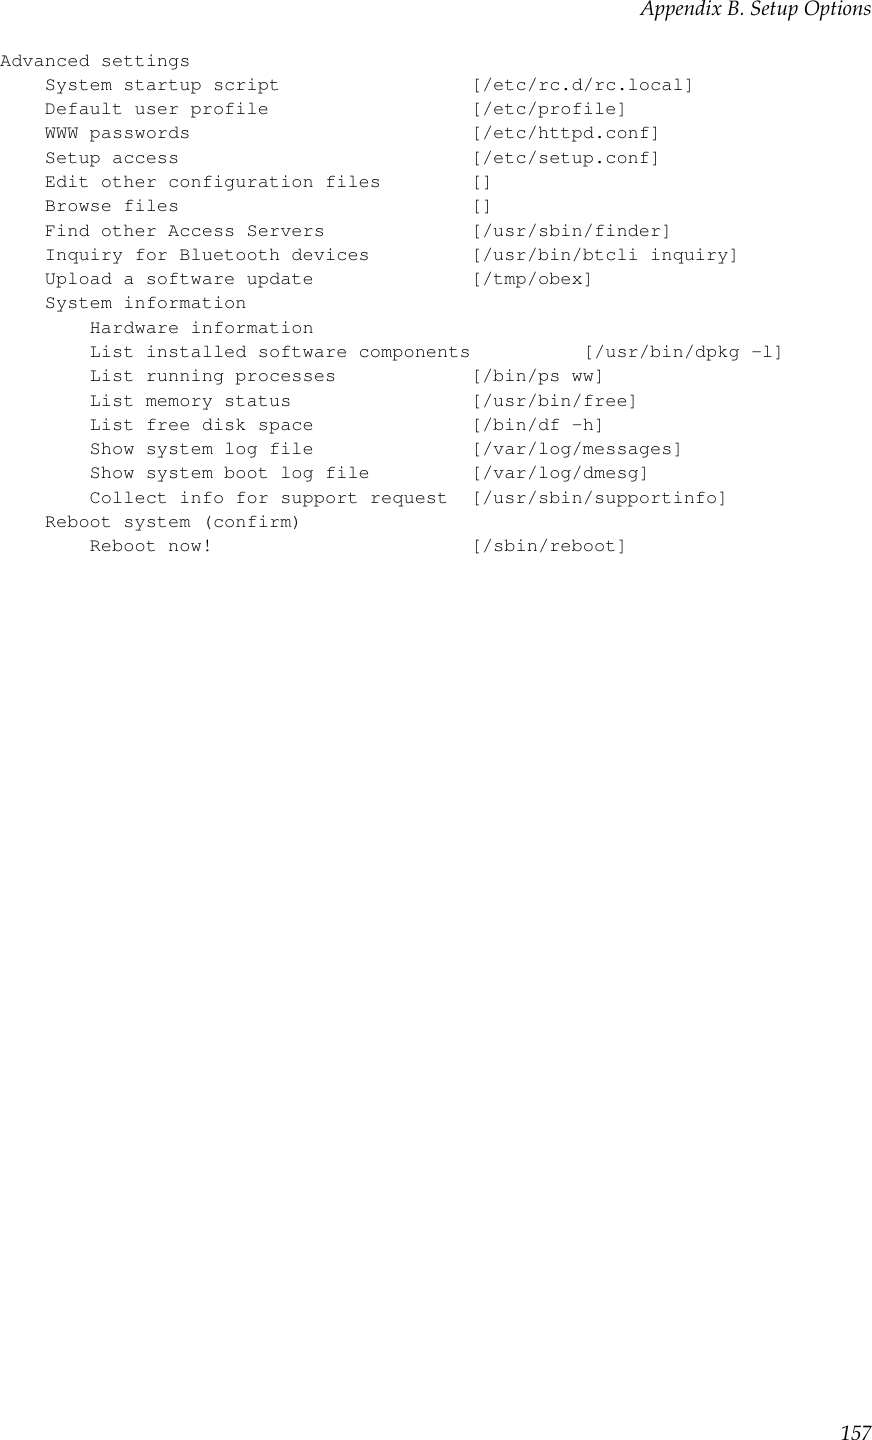 Appendix B. Setup OptionsAdvanced settingsSystem startup script [/etc/rc.d/rc.local]Default user profile [/etc/profile]WWW passwords [/etc/httpd.conf]Setup access [/etc/setup.conf]Edit other configuration files []Browse files []Find other Access Servers [/usr/sbin/finder]Inquiry for Bluetooth devices [/usr/bin/btcli inquiry]Upload a software update [/tmp/obex]System informationHardware informationList installed software components [/usr/bin/dpkg -l]List running processes [/bin/ps ww]List memory status [/usr/bin/free]List free disk space [/bin/df -h]Show system log file [/var/log/messages]Show system boot log file [/var/log/dmesg]Collect info for support request [/usr/sbin/supportinfo]Reboot system (confirm)Reboot now! [/sbin/reboot]157